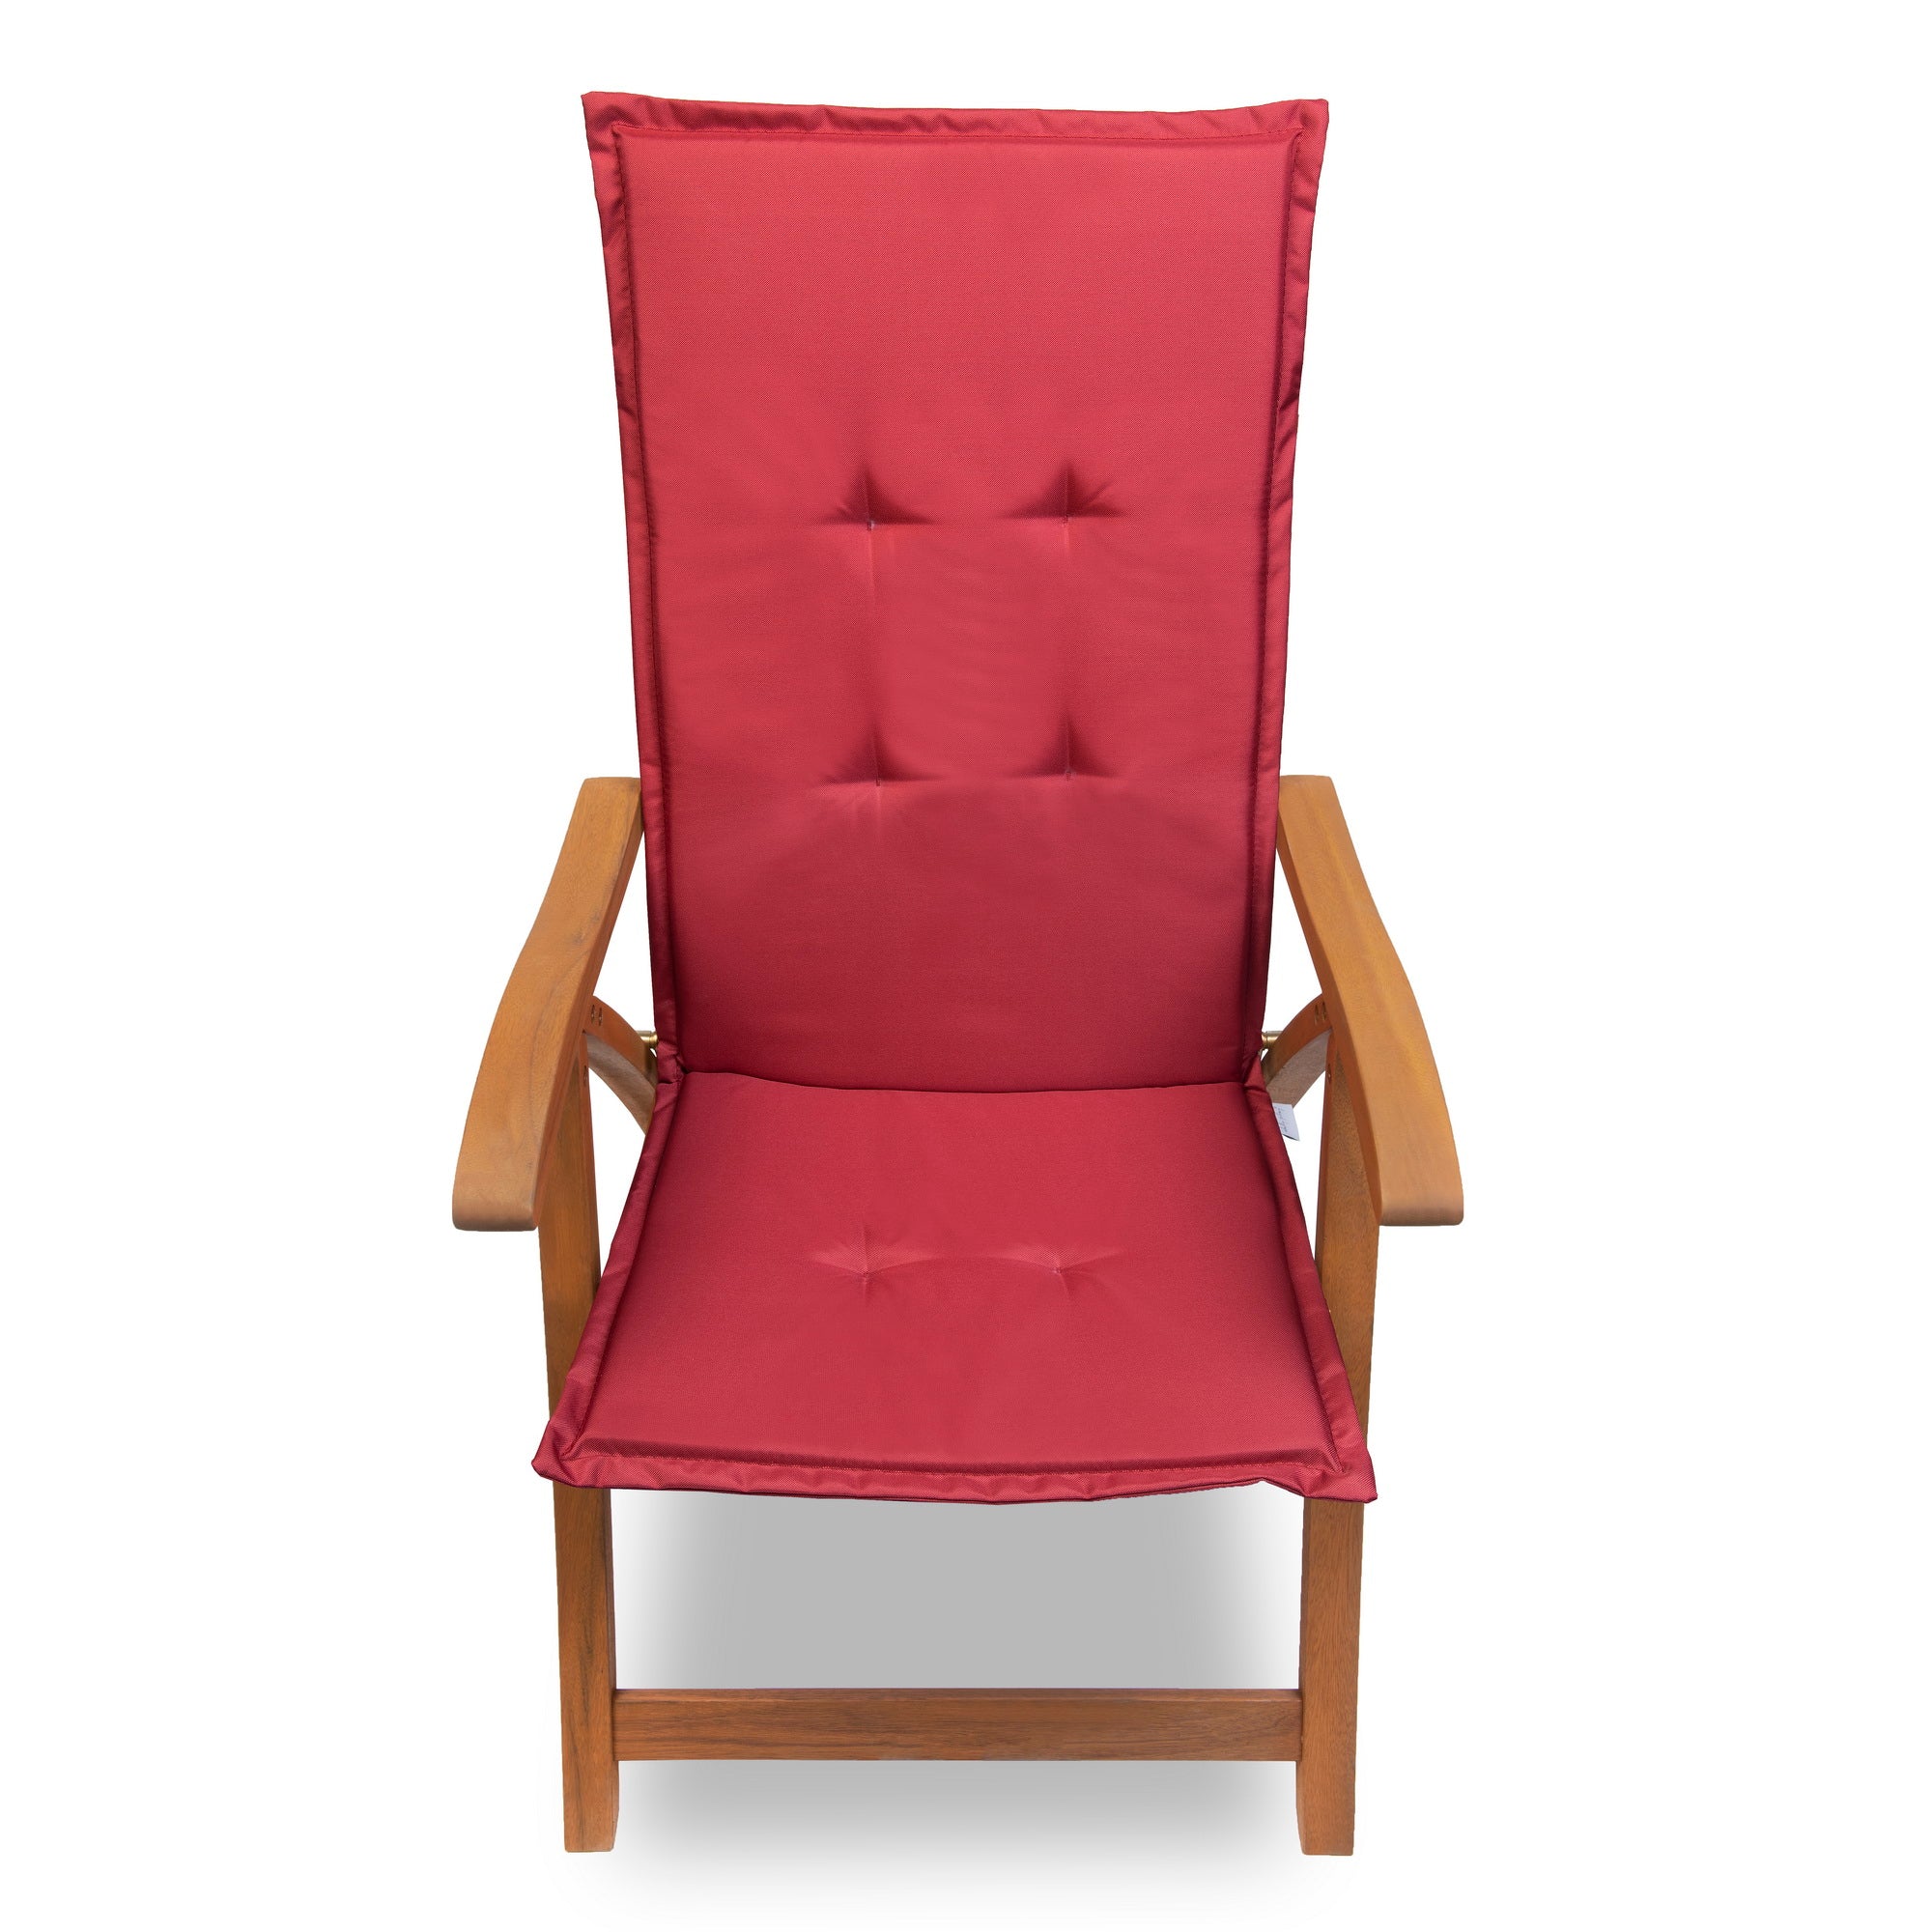 Cuscini per sedie da giardino 120x50 cm impermeabili - cuscini per sedie con schienale alto cuscino impermeabile cuscino per schienale cuscini per sedili mobili da giardino